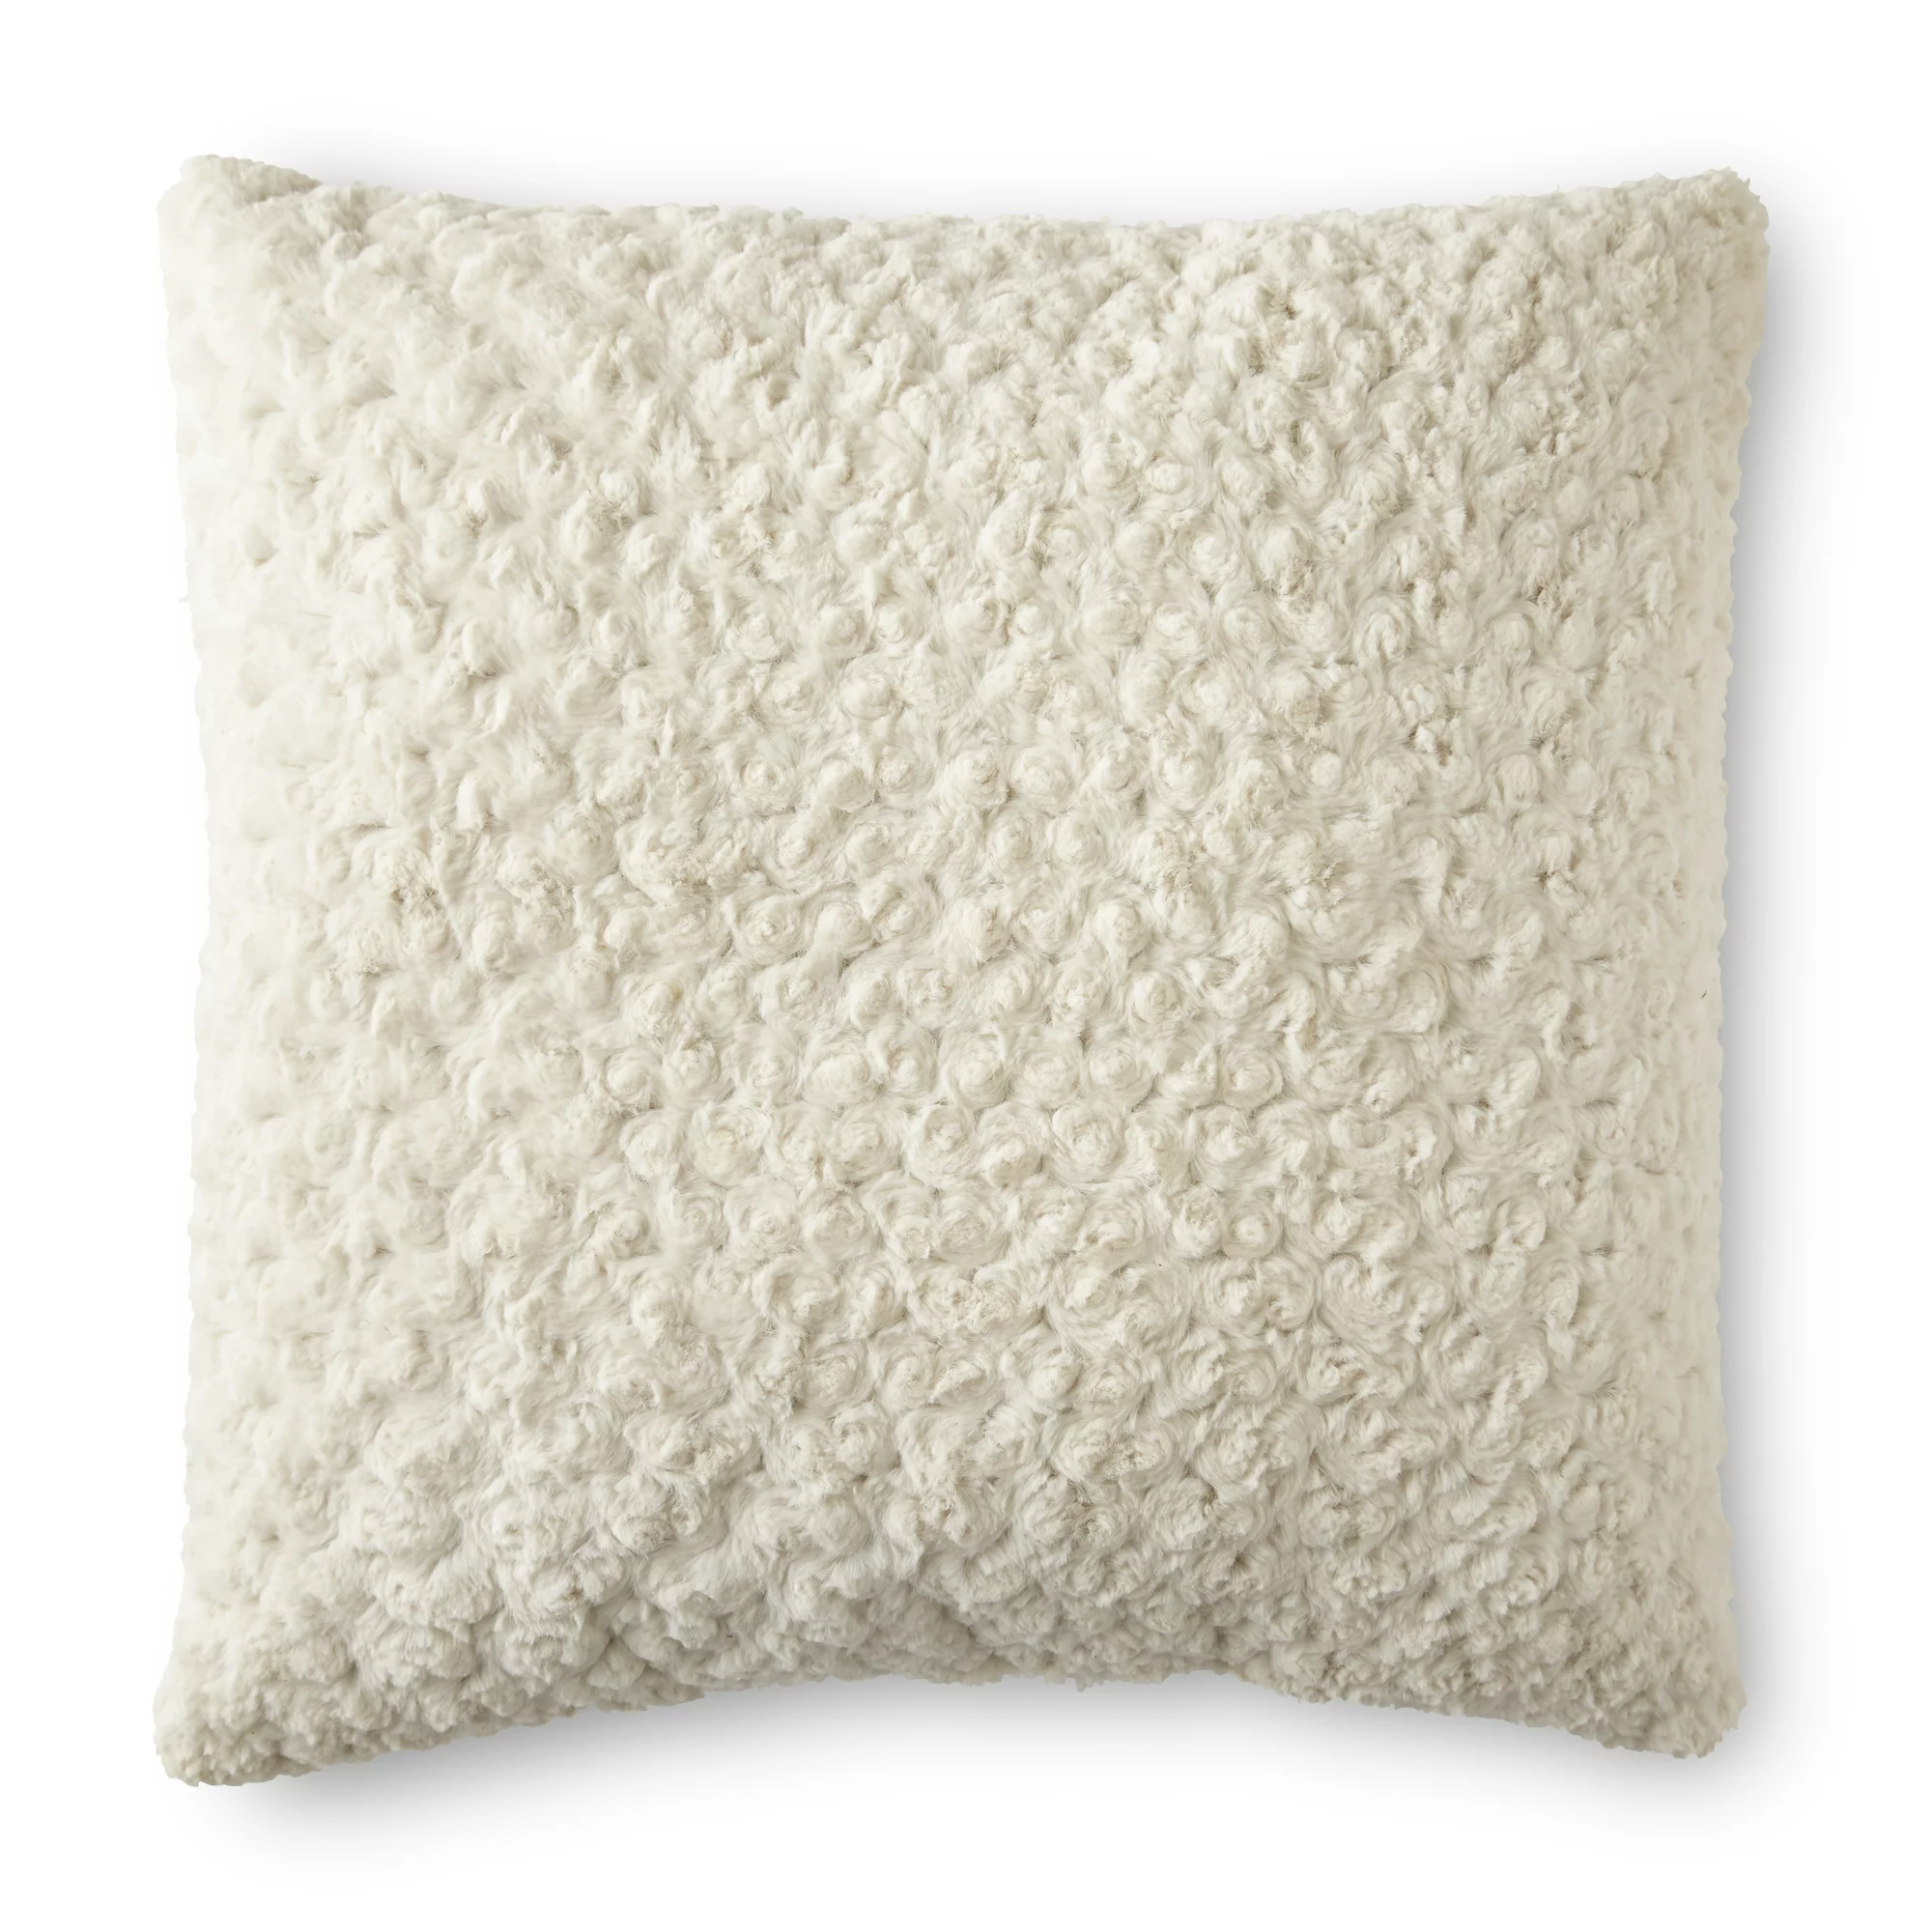 Mainstays Rosette Plush Decorative Square Throw Pillow, 22" x 22", Ivory Color - $13.98